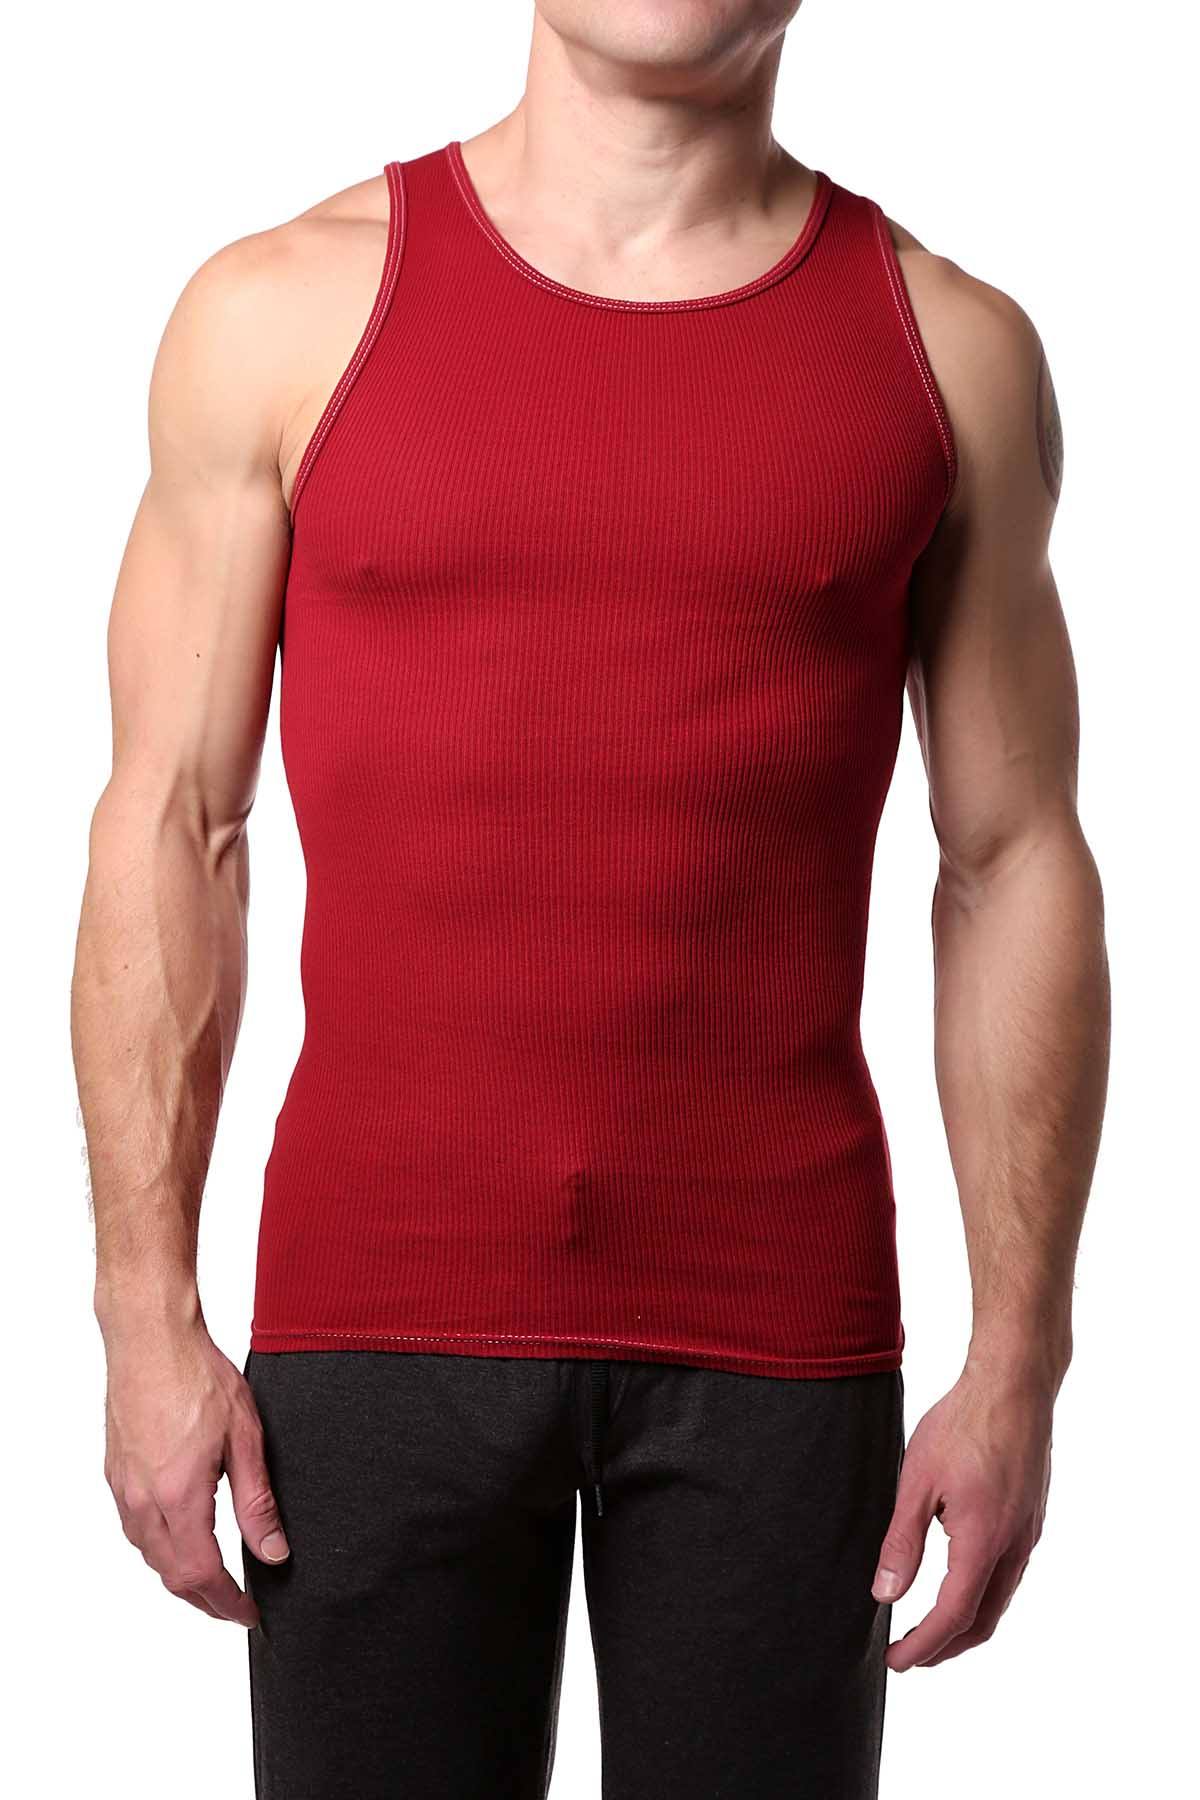 Go Softwear Cardinal-Red Rib Tank Top